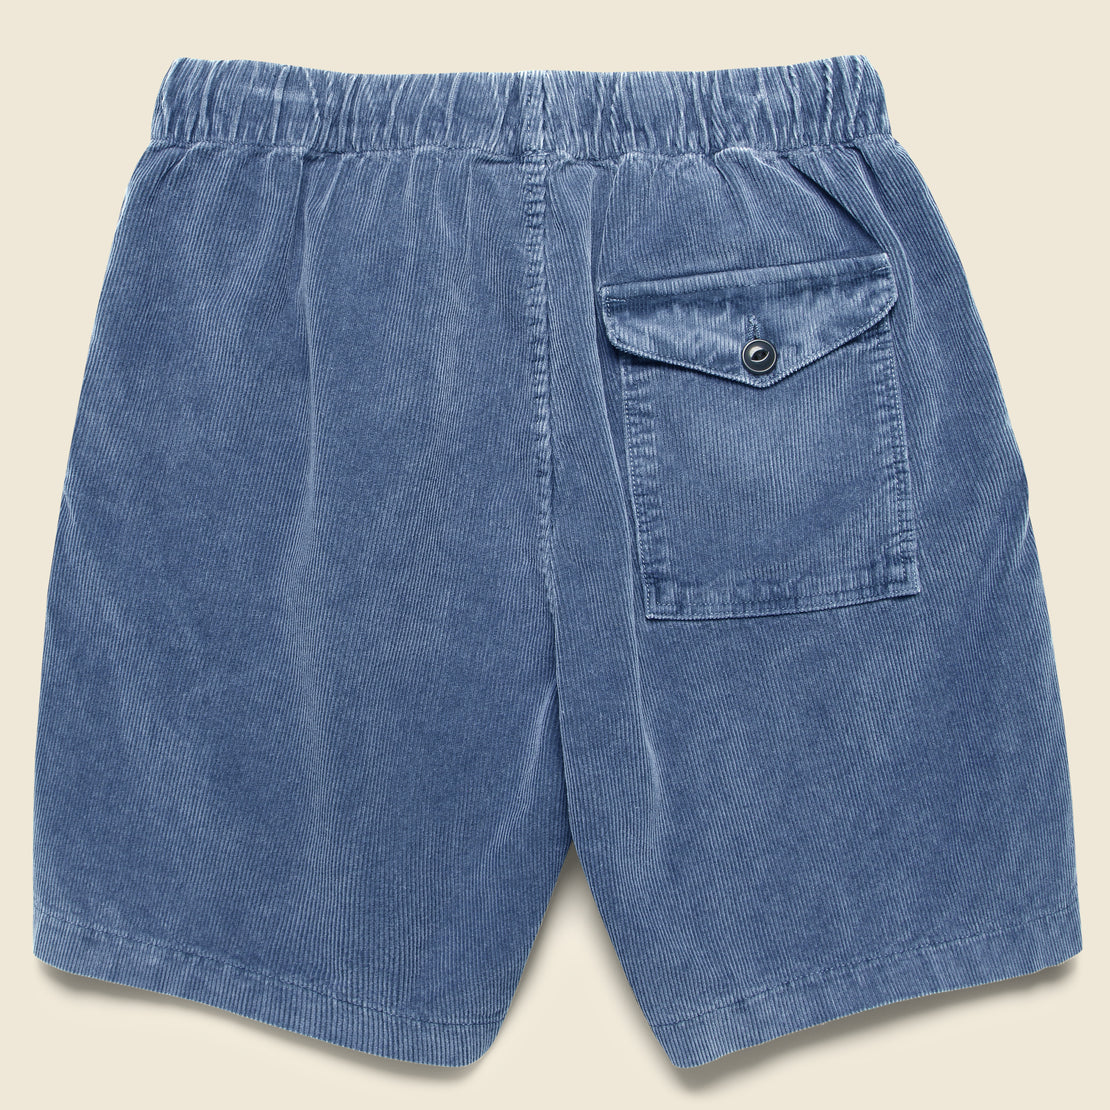 Corduroy Easy Short - Union Blue - Save Khaki - STAG Provisions - Shorts - Lounge